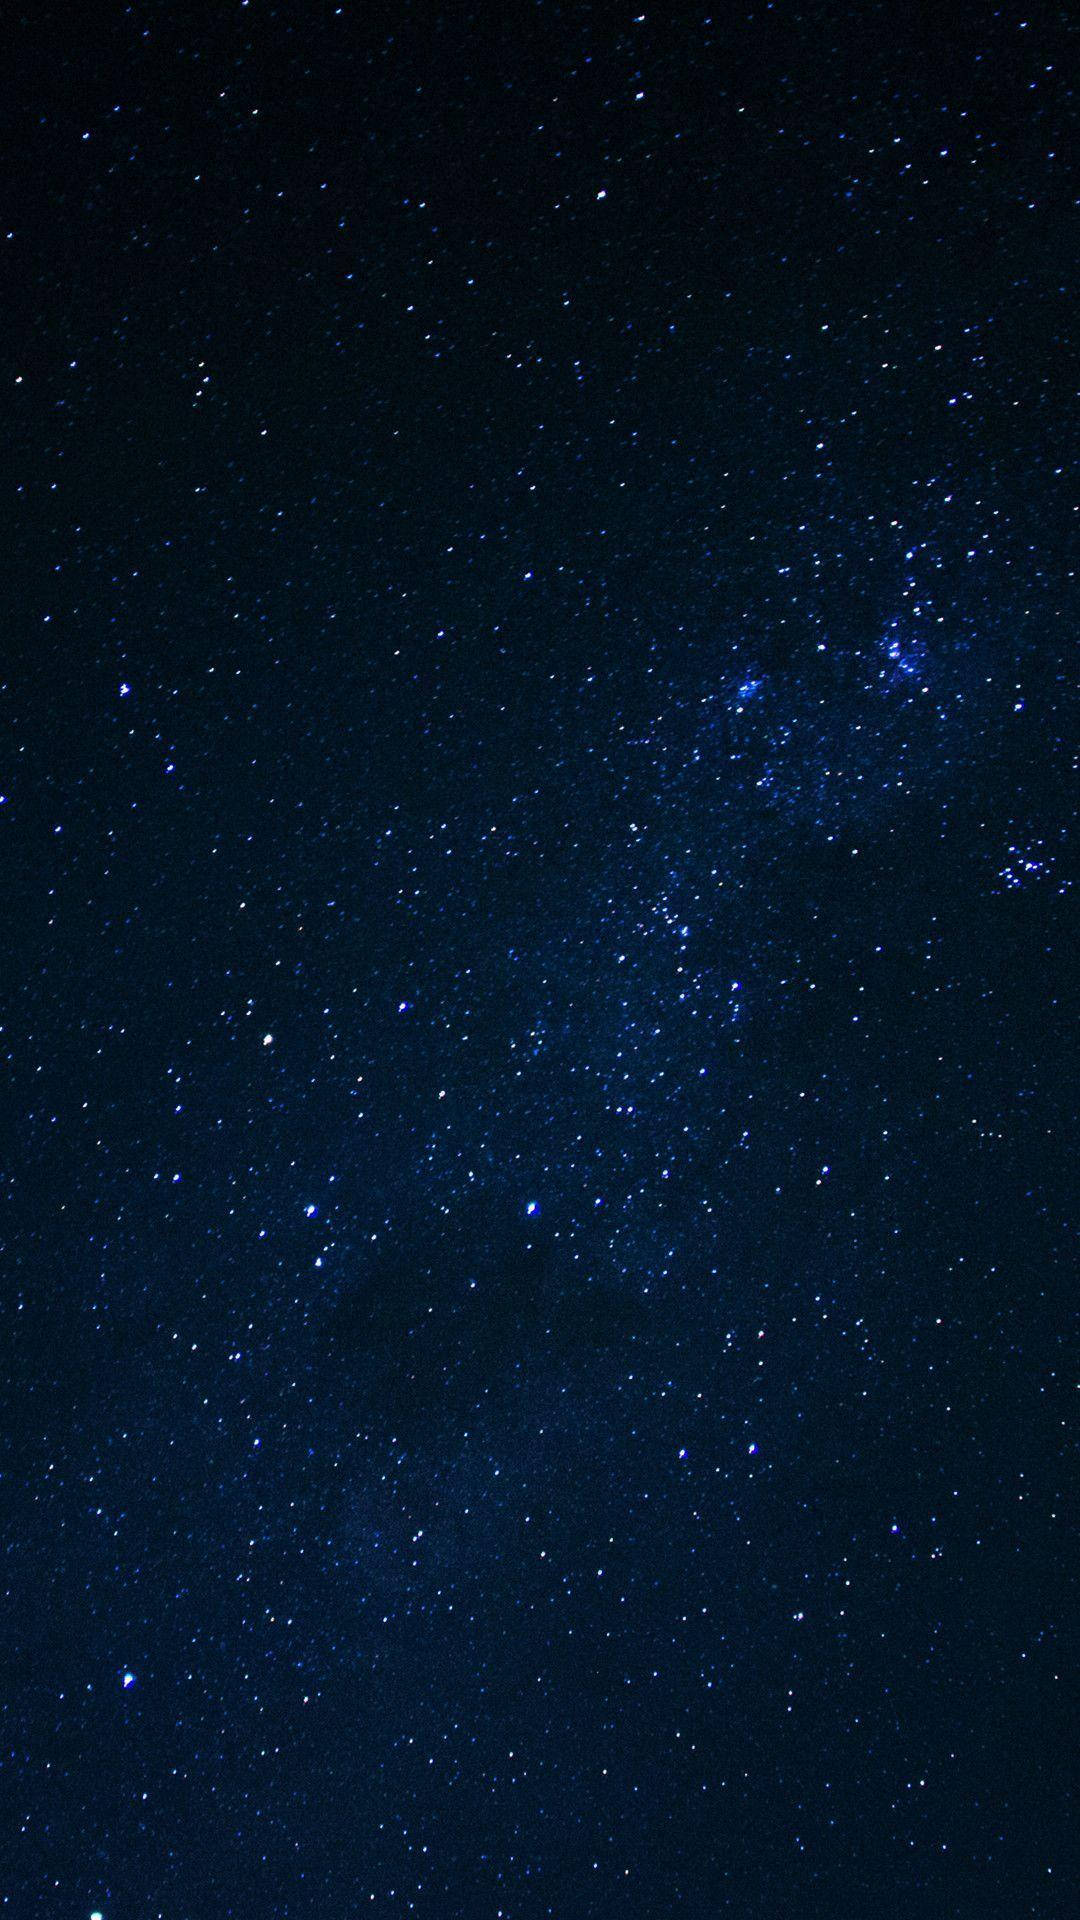 Dark Phone Night Sky With Stars